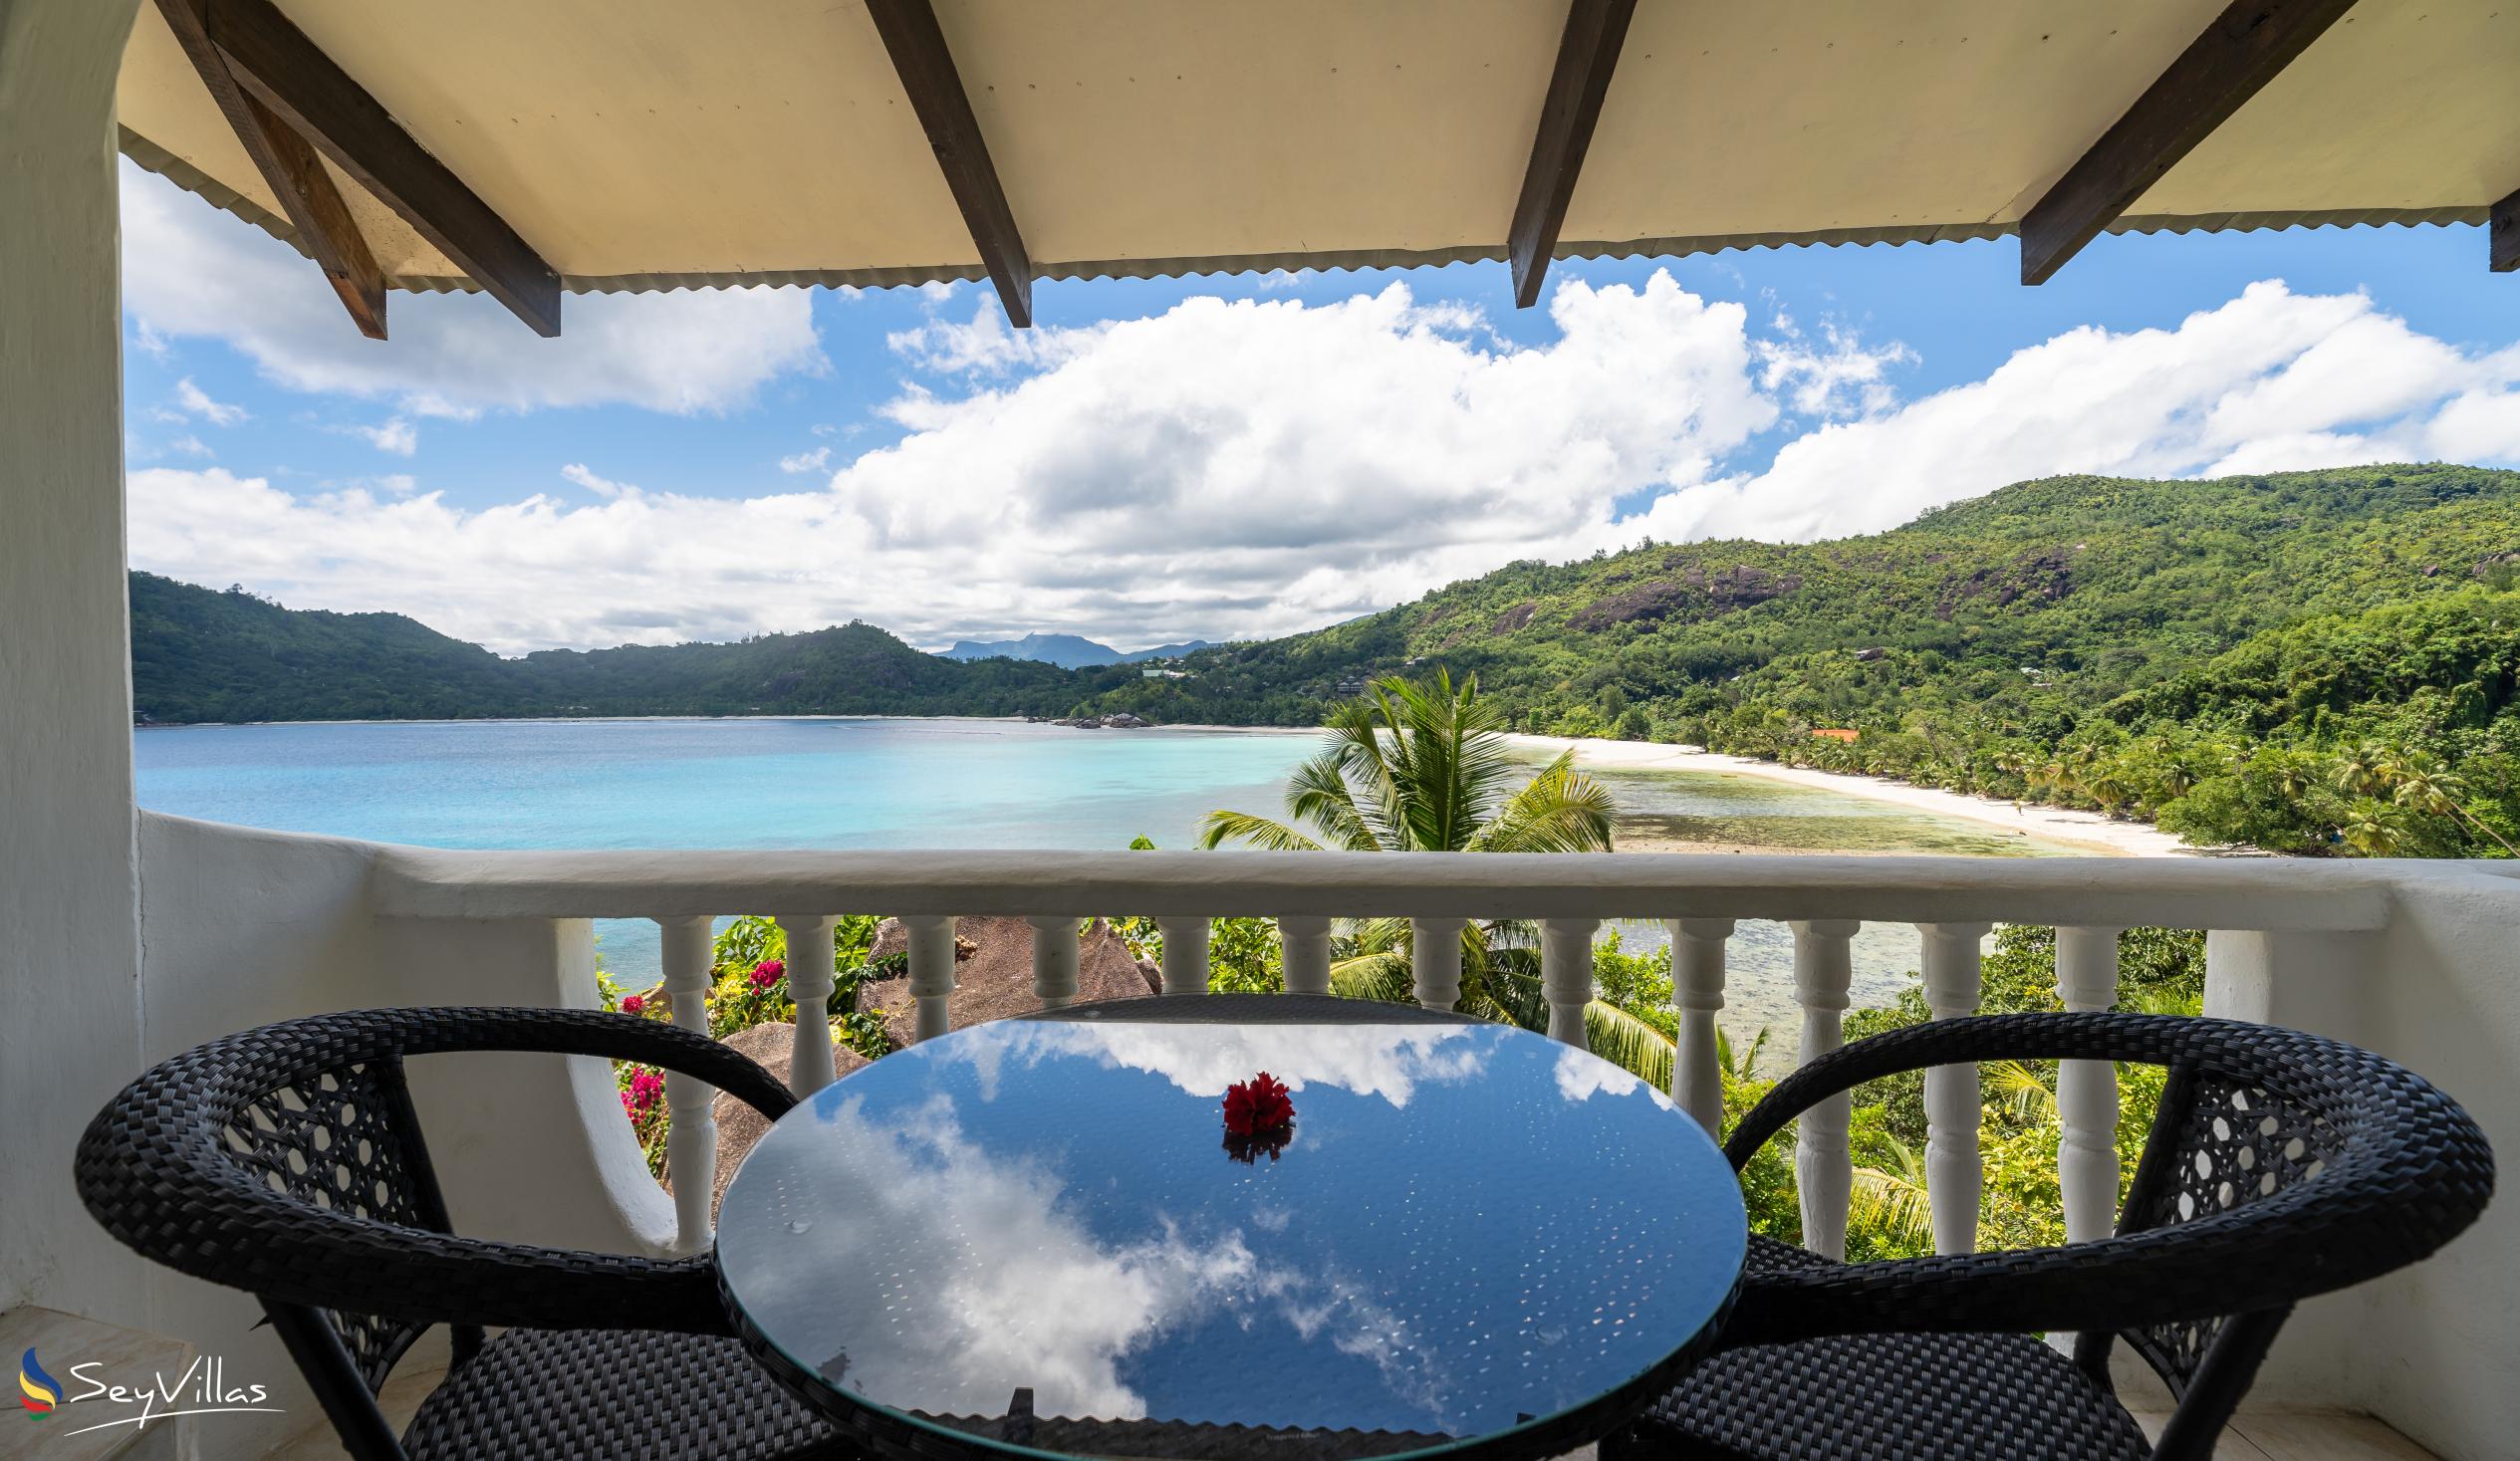 Photo 114: Lazare Picault Hotel - Superior Room - Mahé (Seychelles)